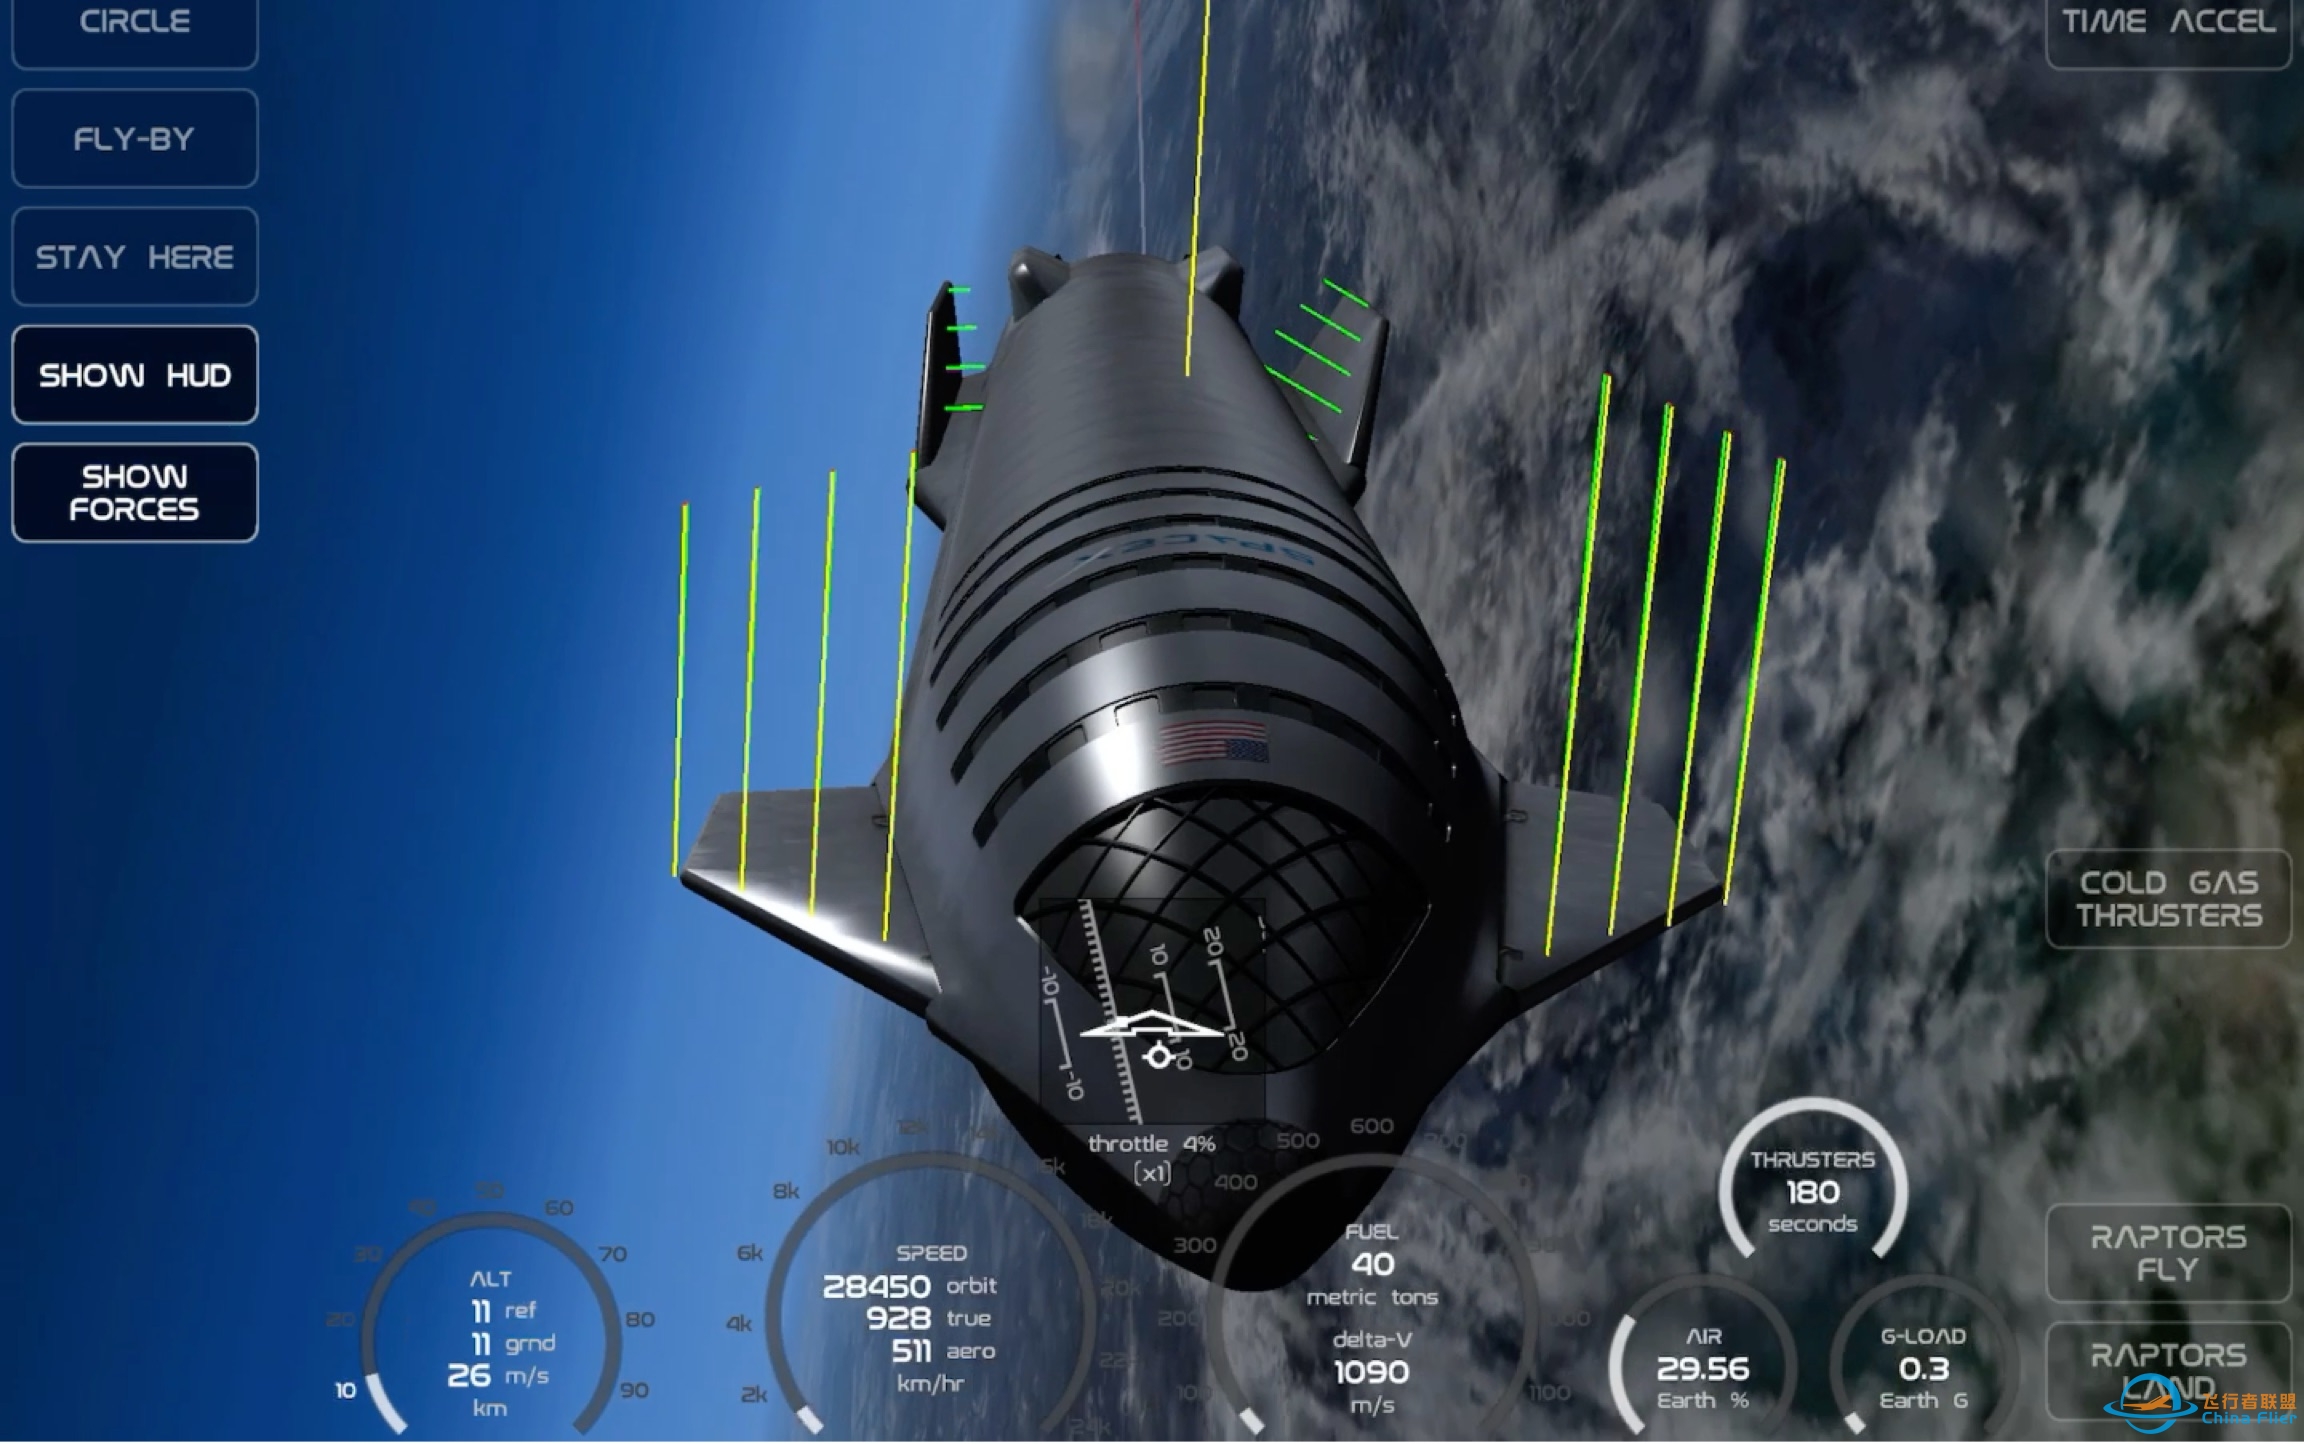 [SpaceX]用X-Plane: Starship模拟星舰高空飞行测试-6131 